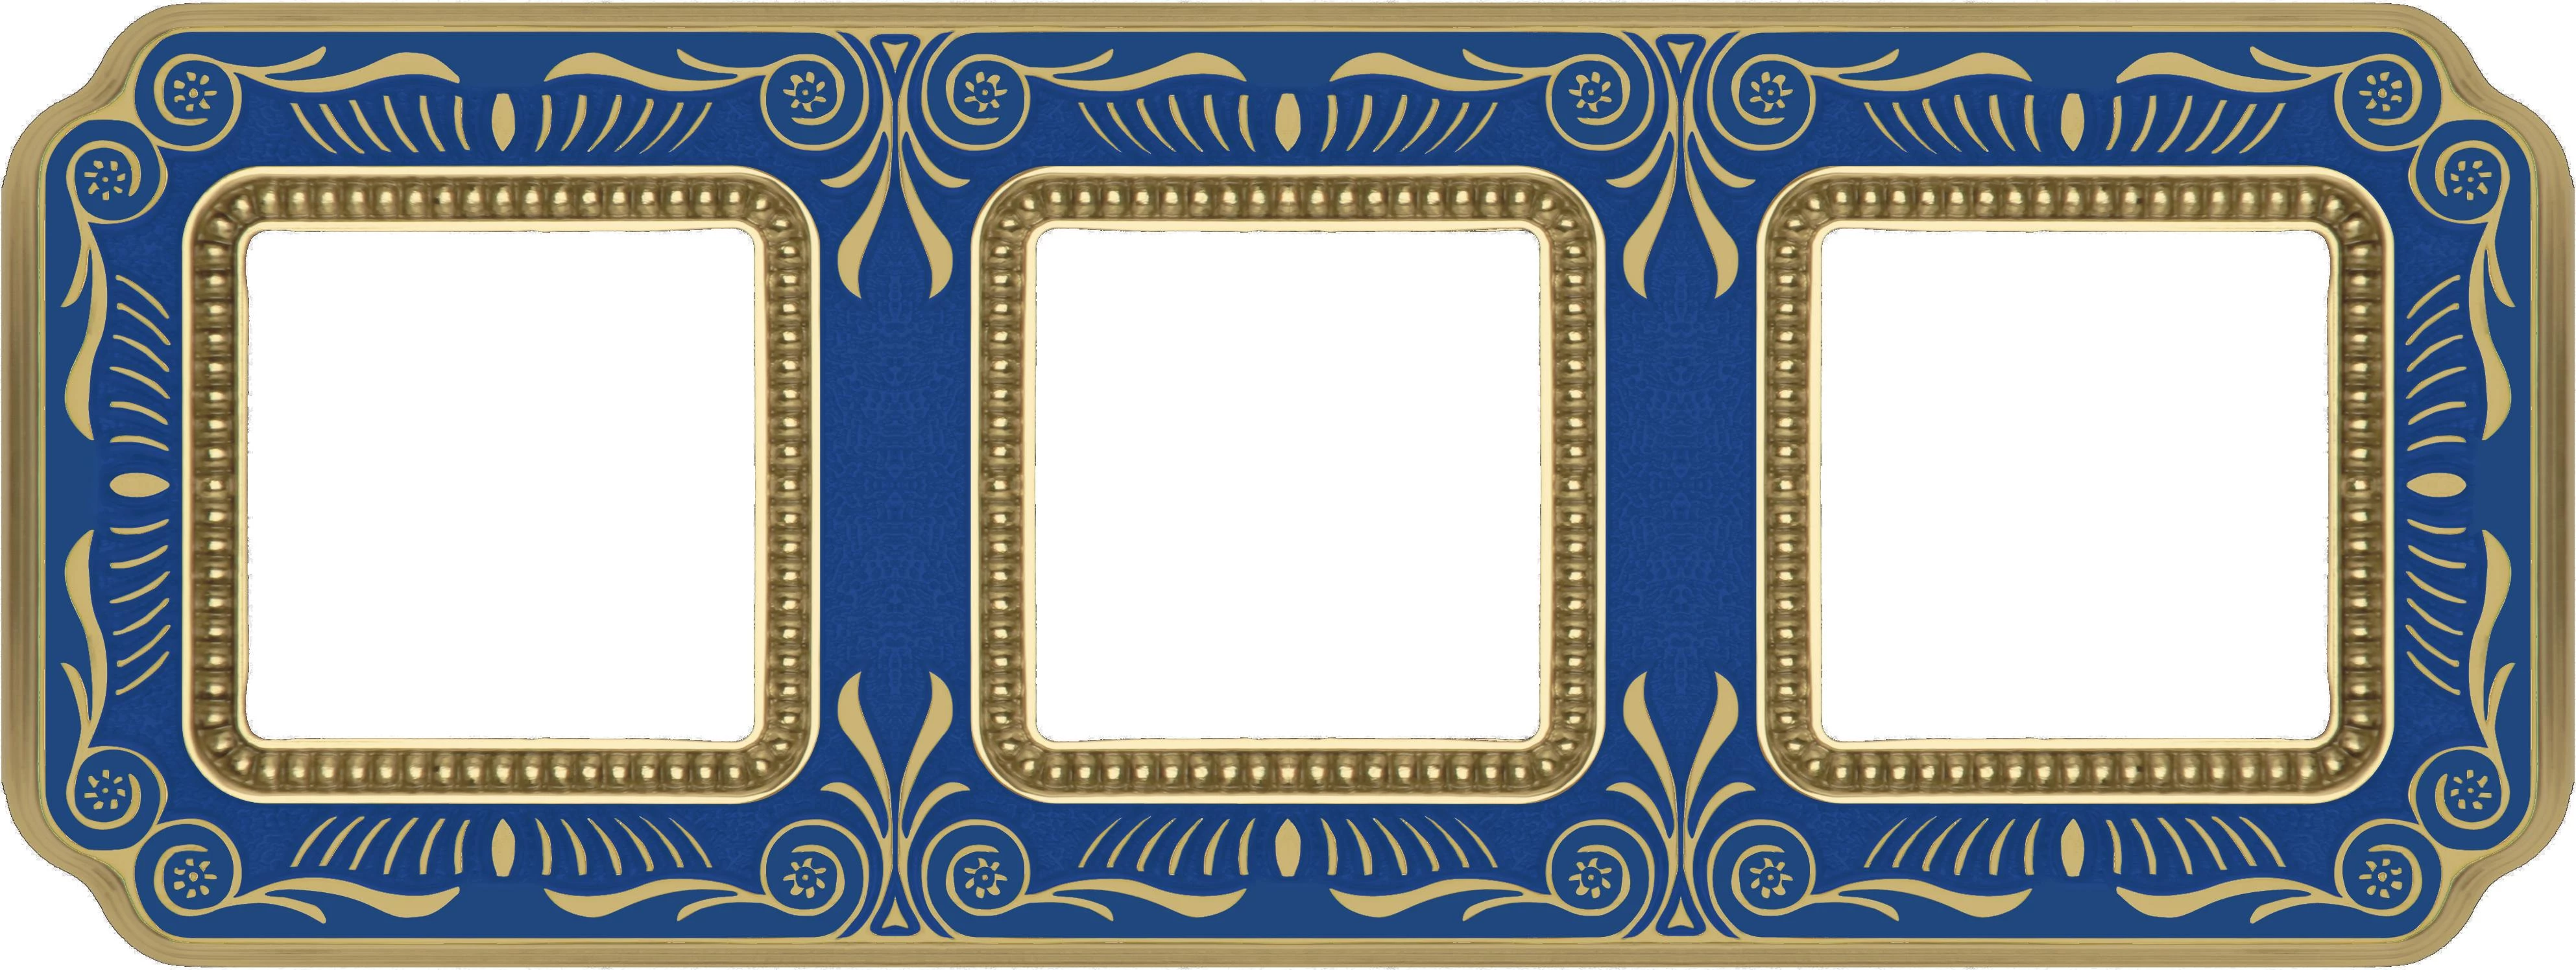  артикул FD01363AZEN название Рамка 3-ая (тройная), цвет Голубой сапфир, Firenze, Fede